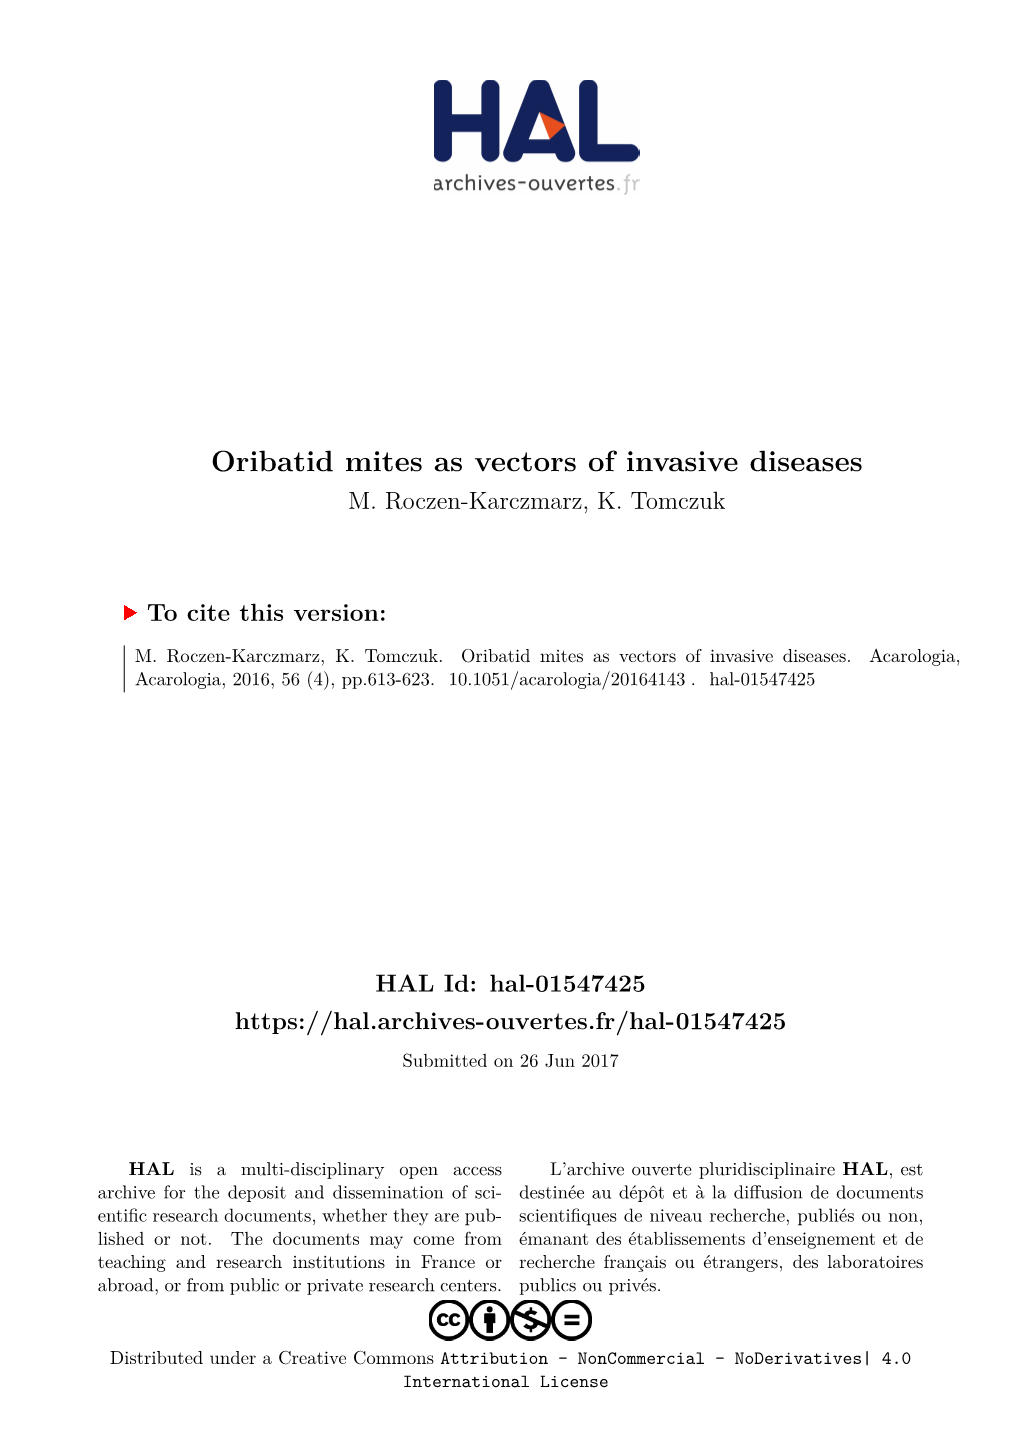 Oribatid Mites As Vectors of Invasive Diseases M